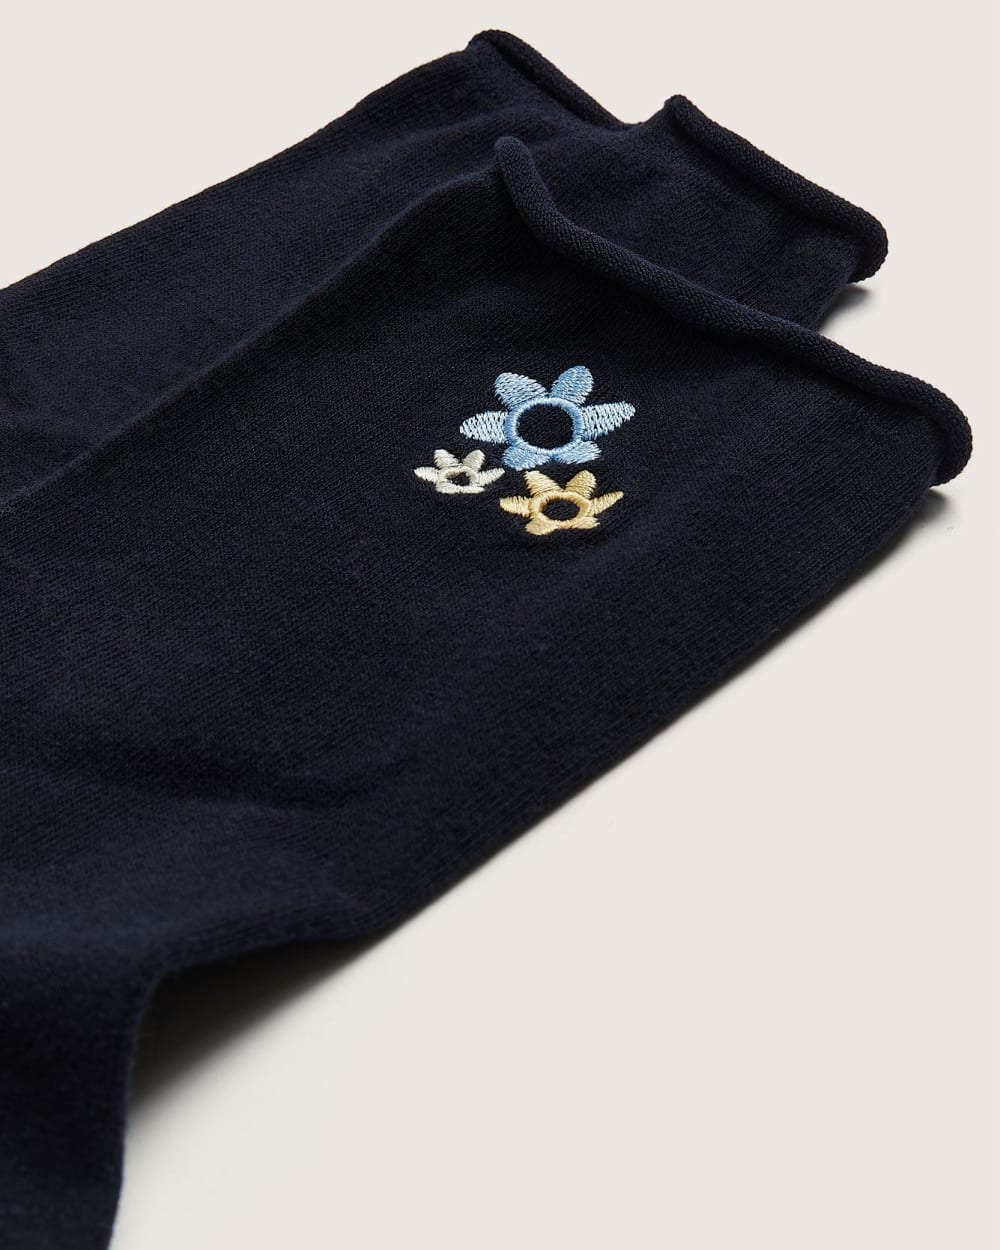 Crew Socks, Flower Embroidery | Penningtons